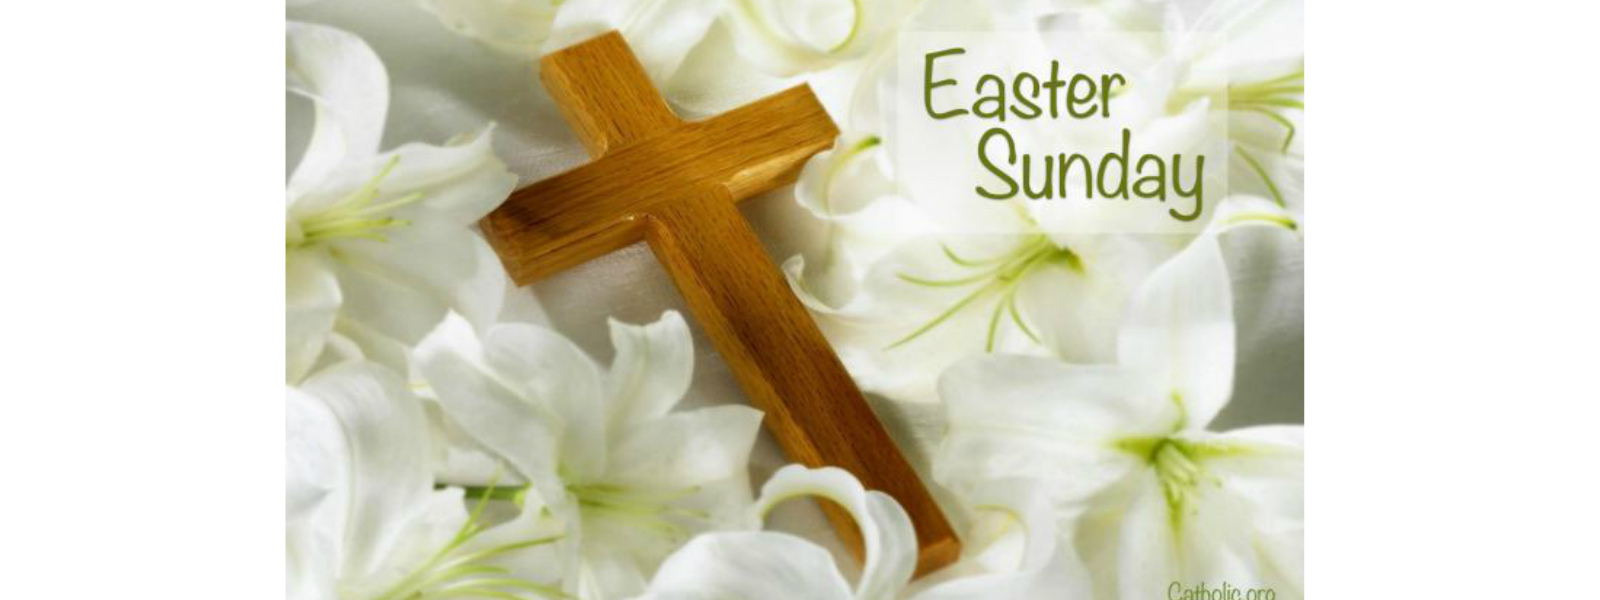 Easter Sunday celebrated across the world